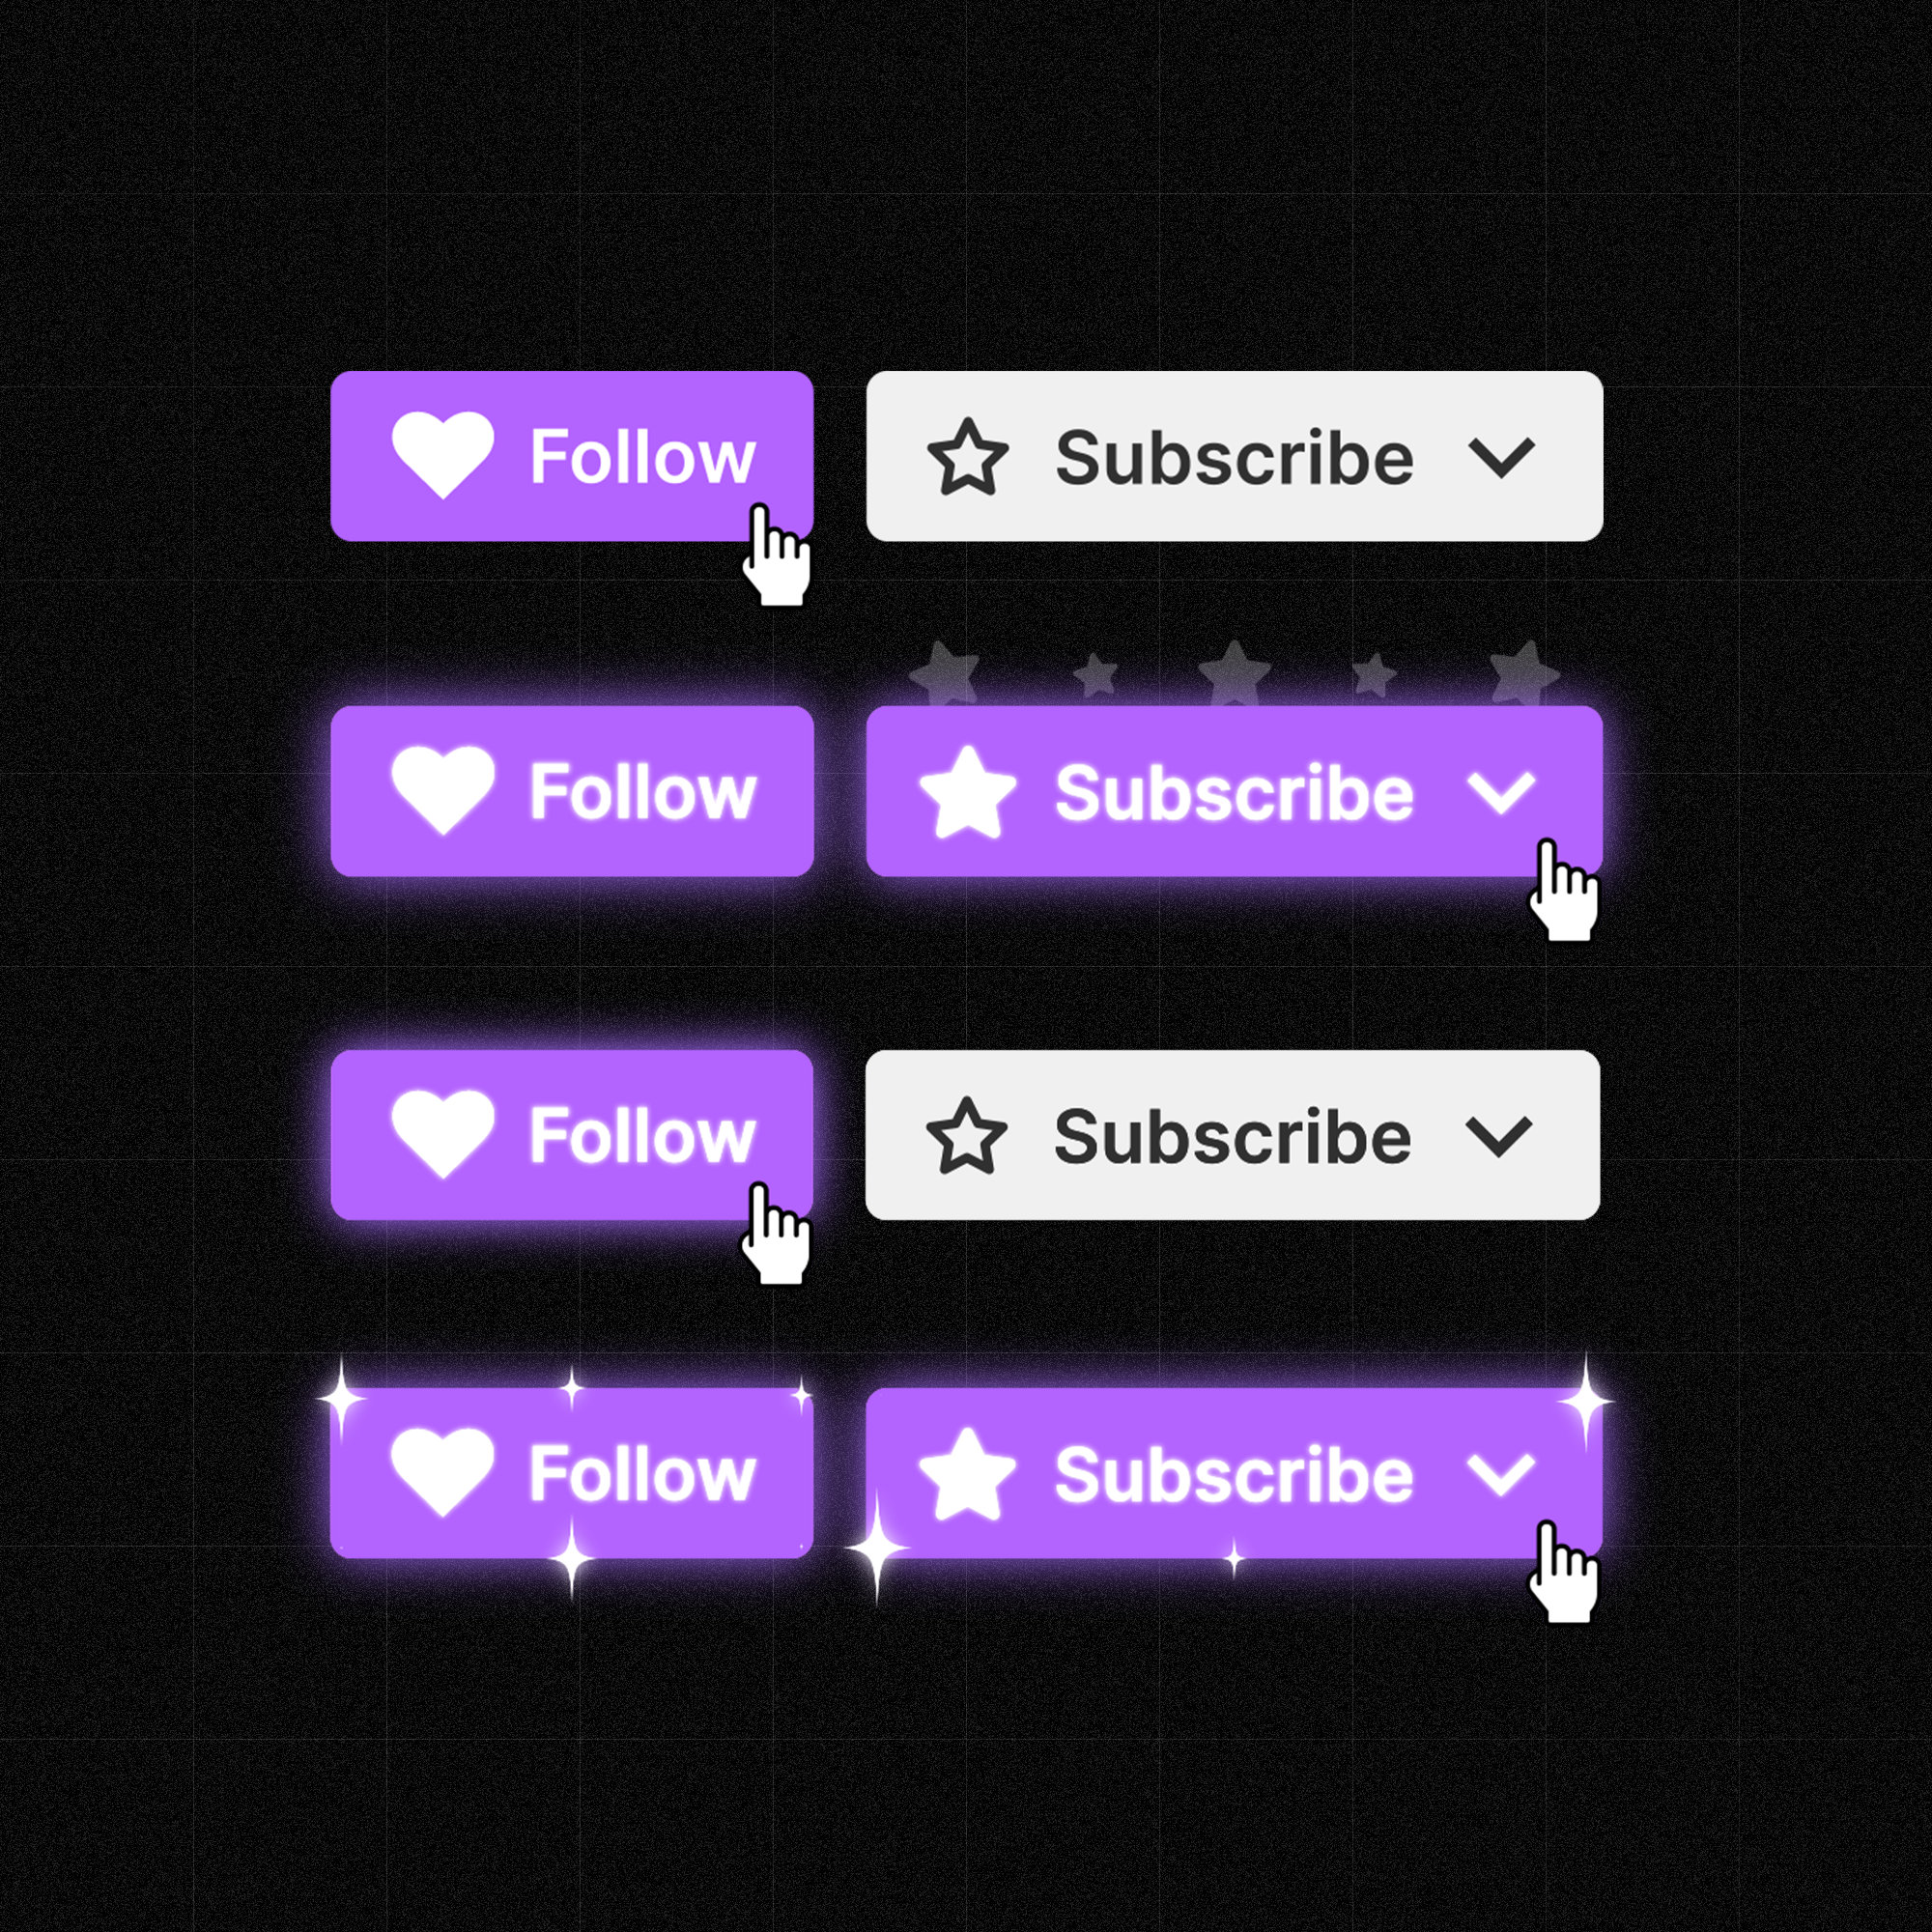 Do you follow us on Twitch? 😈